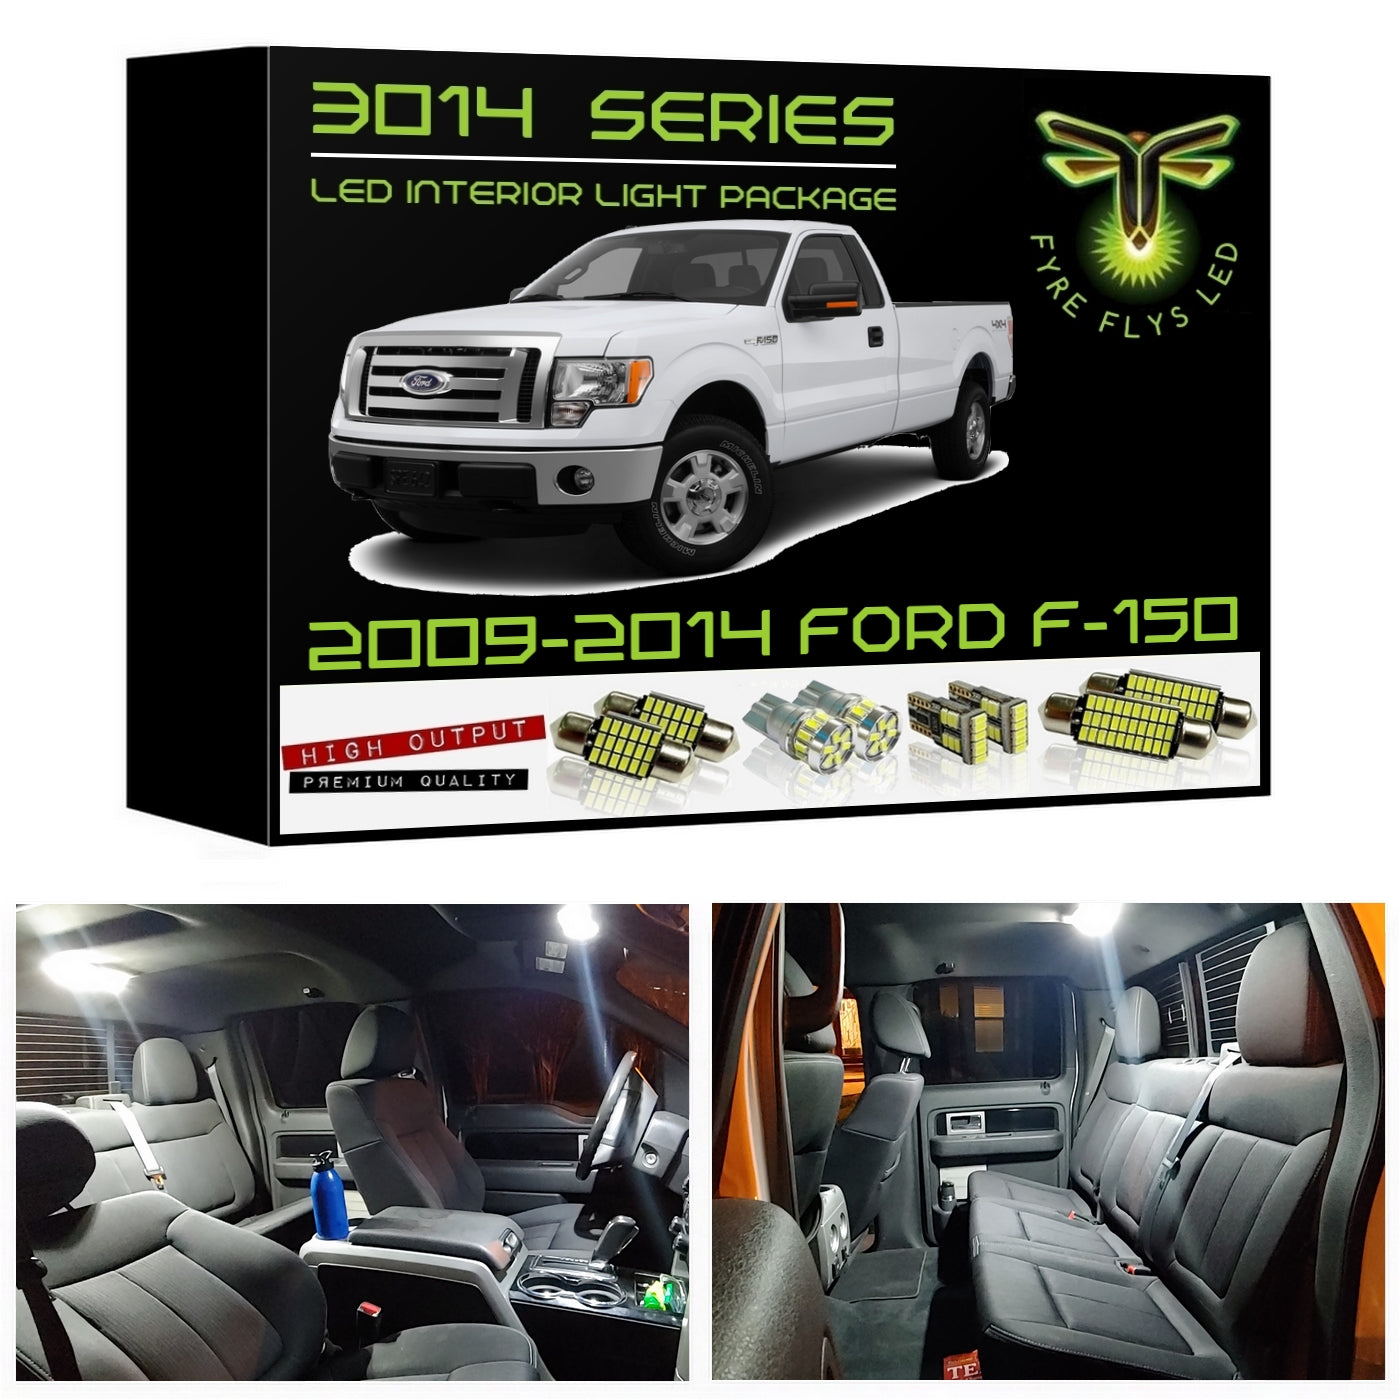 Complete 3014 Series LED interior light kit for 2009-2014 Ford F-150 – Fyre  Flys